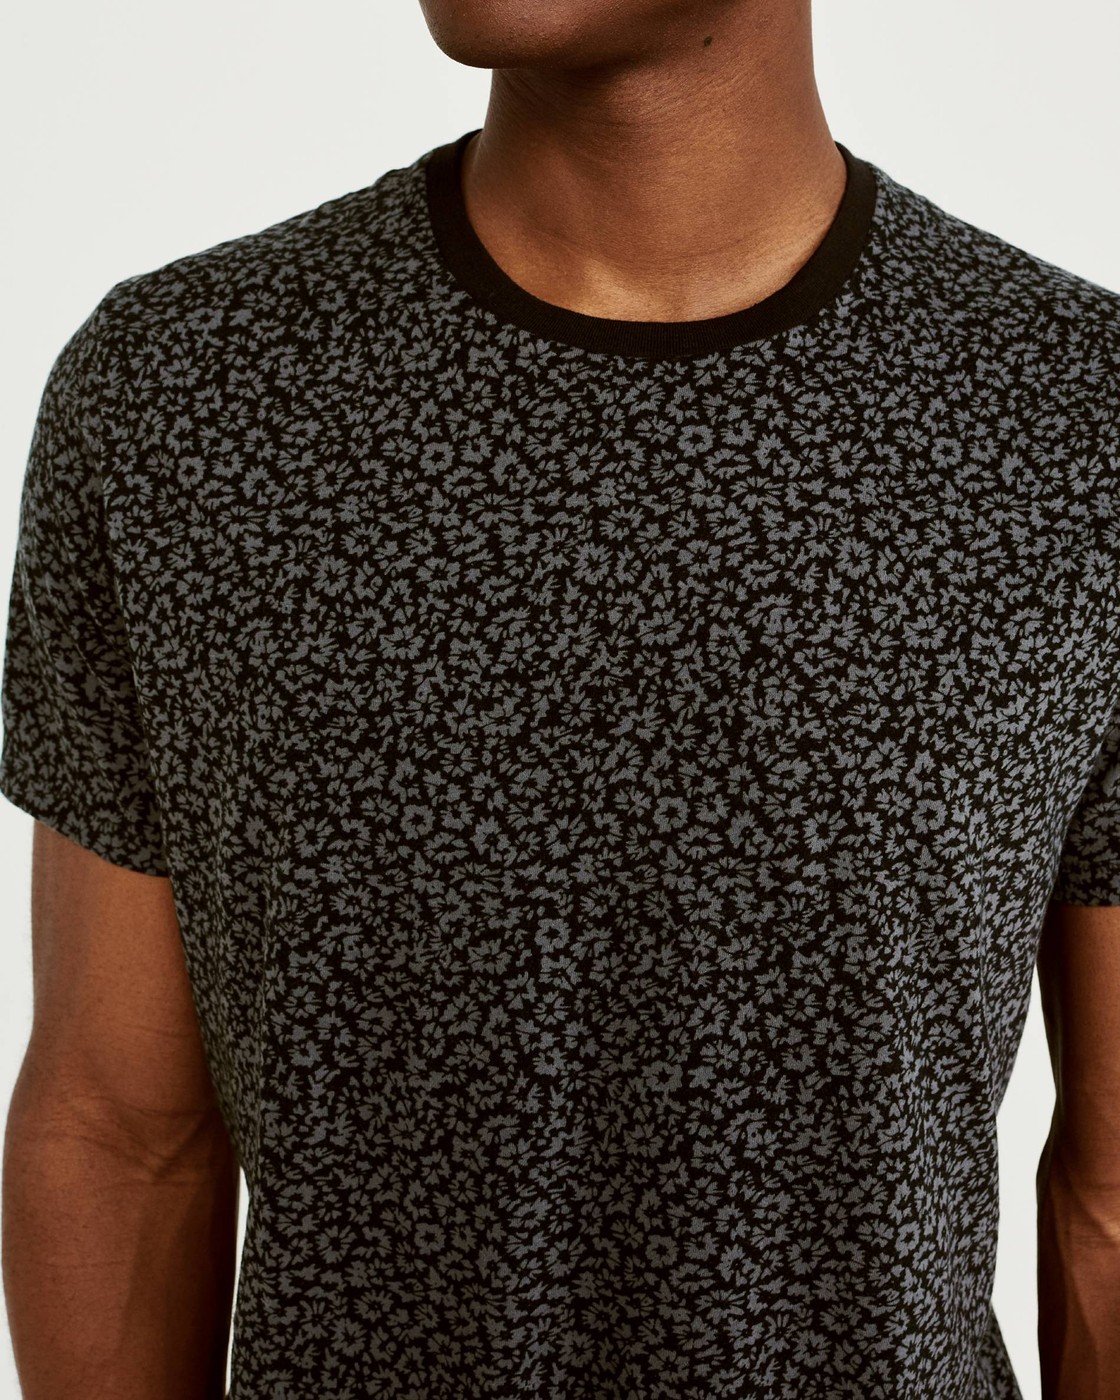 Черная футболка - мужская футболка Abercrombie & Fitch, XL, XL